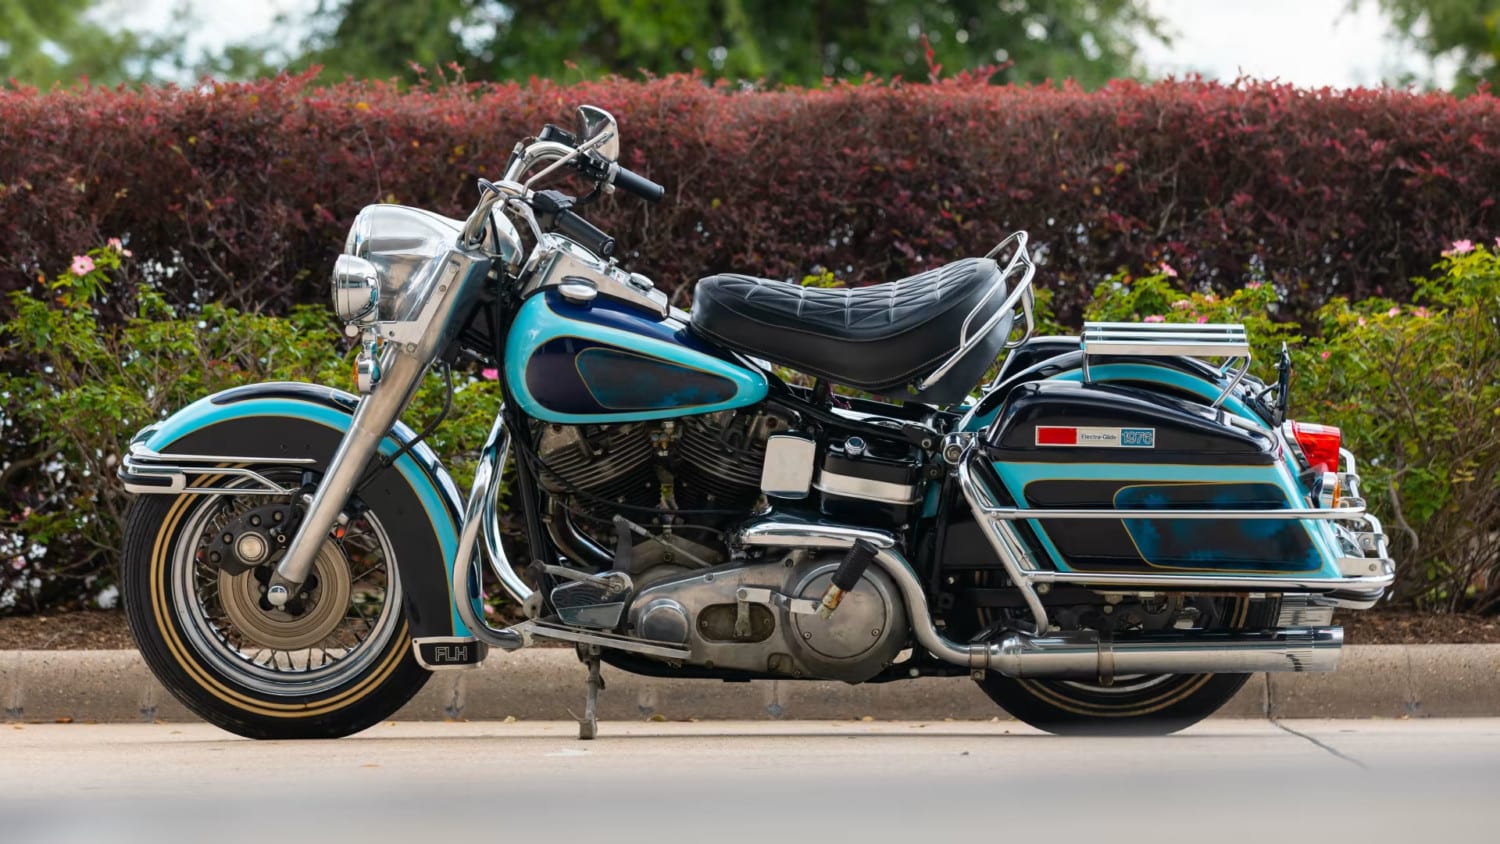 Elvis’ Harley-Davidson bortauktioneres igen, igen